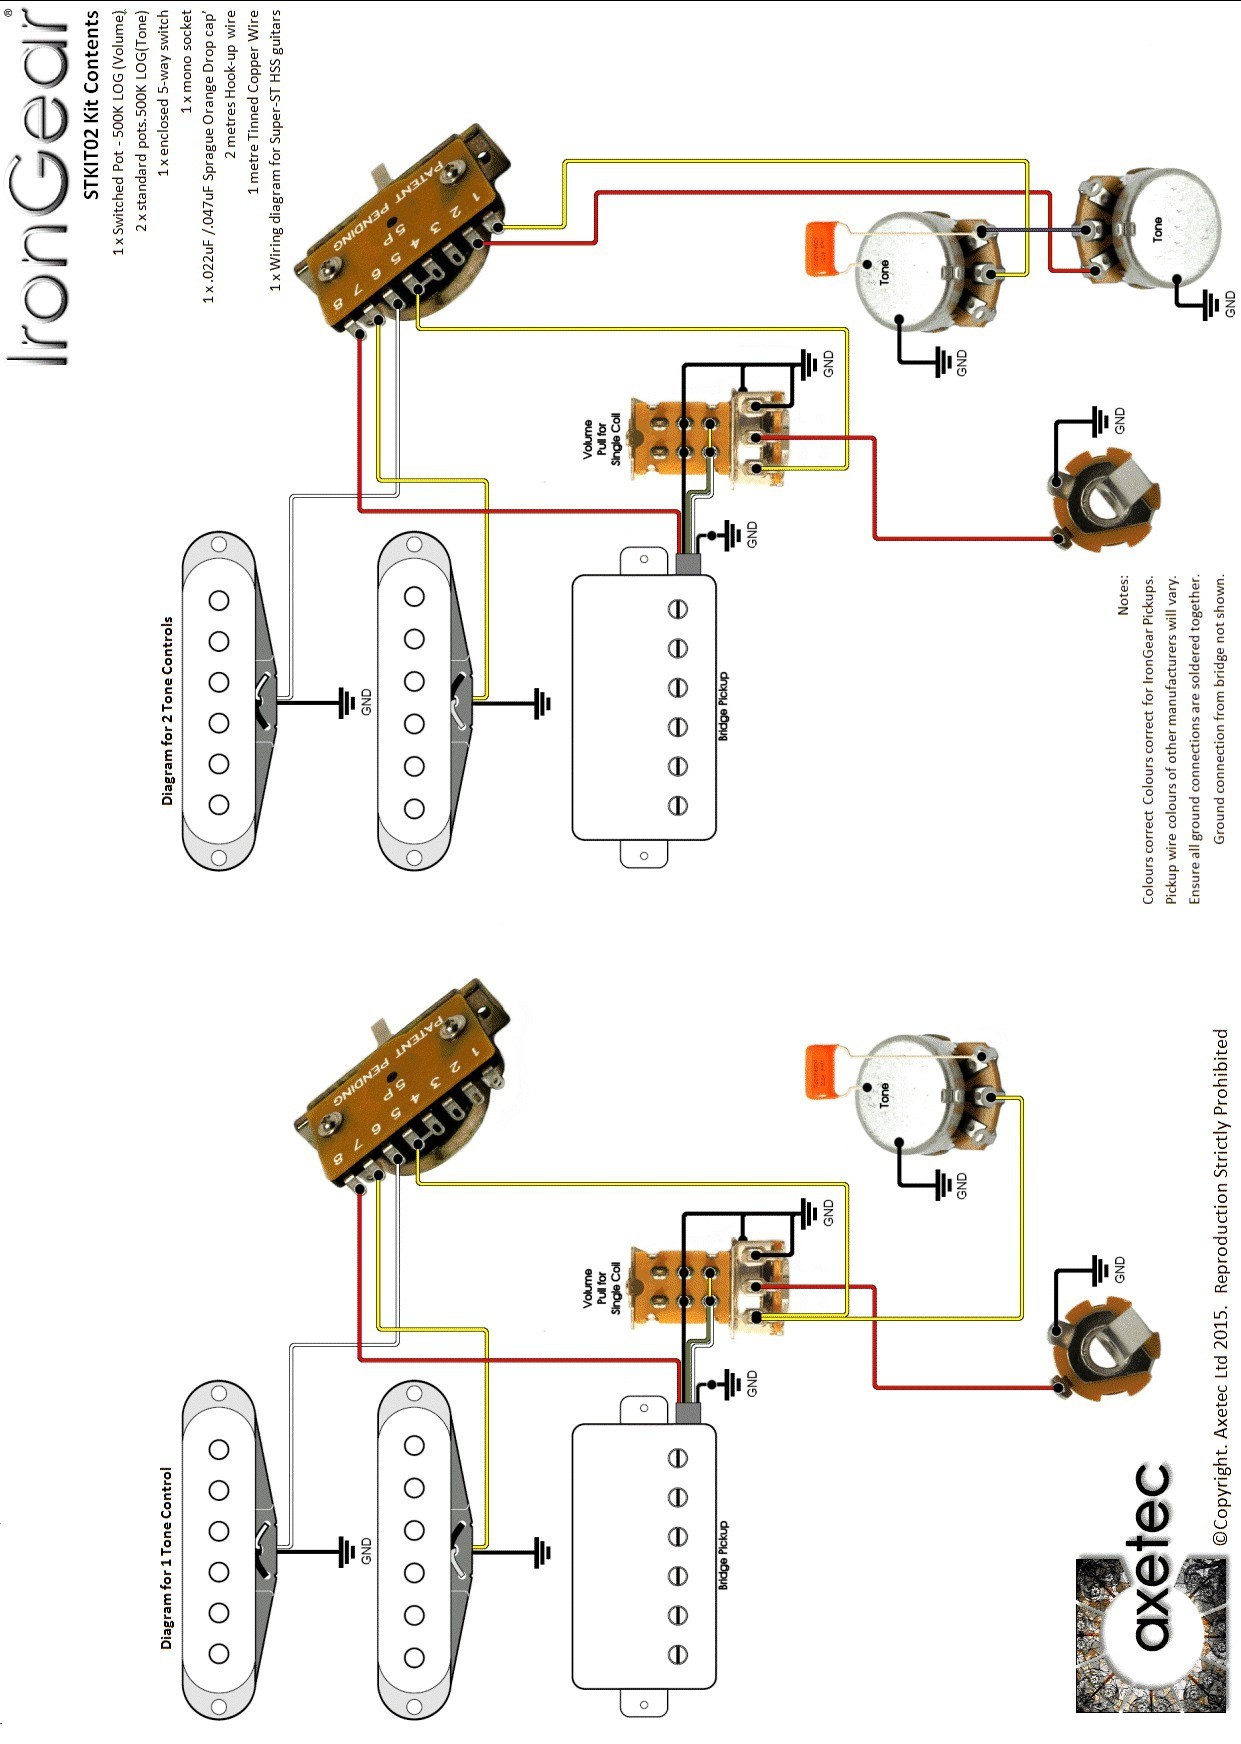 Wiring Diagram for Ibanez Blazer Guitar Valid Wiring Diagram for A Guitar Best Wiring Diagram Fender